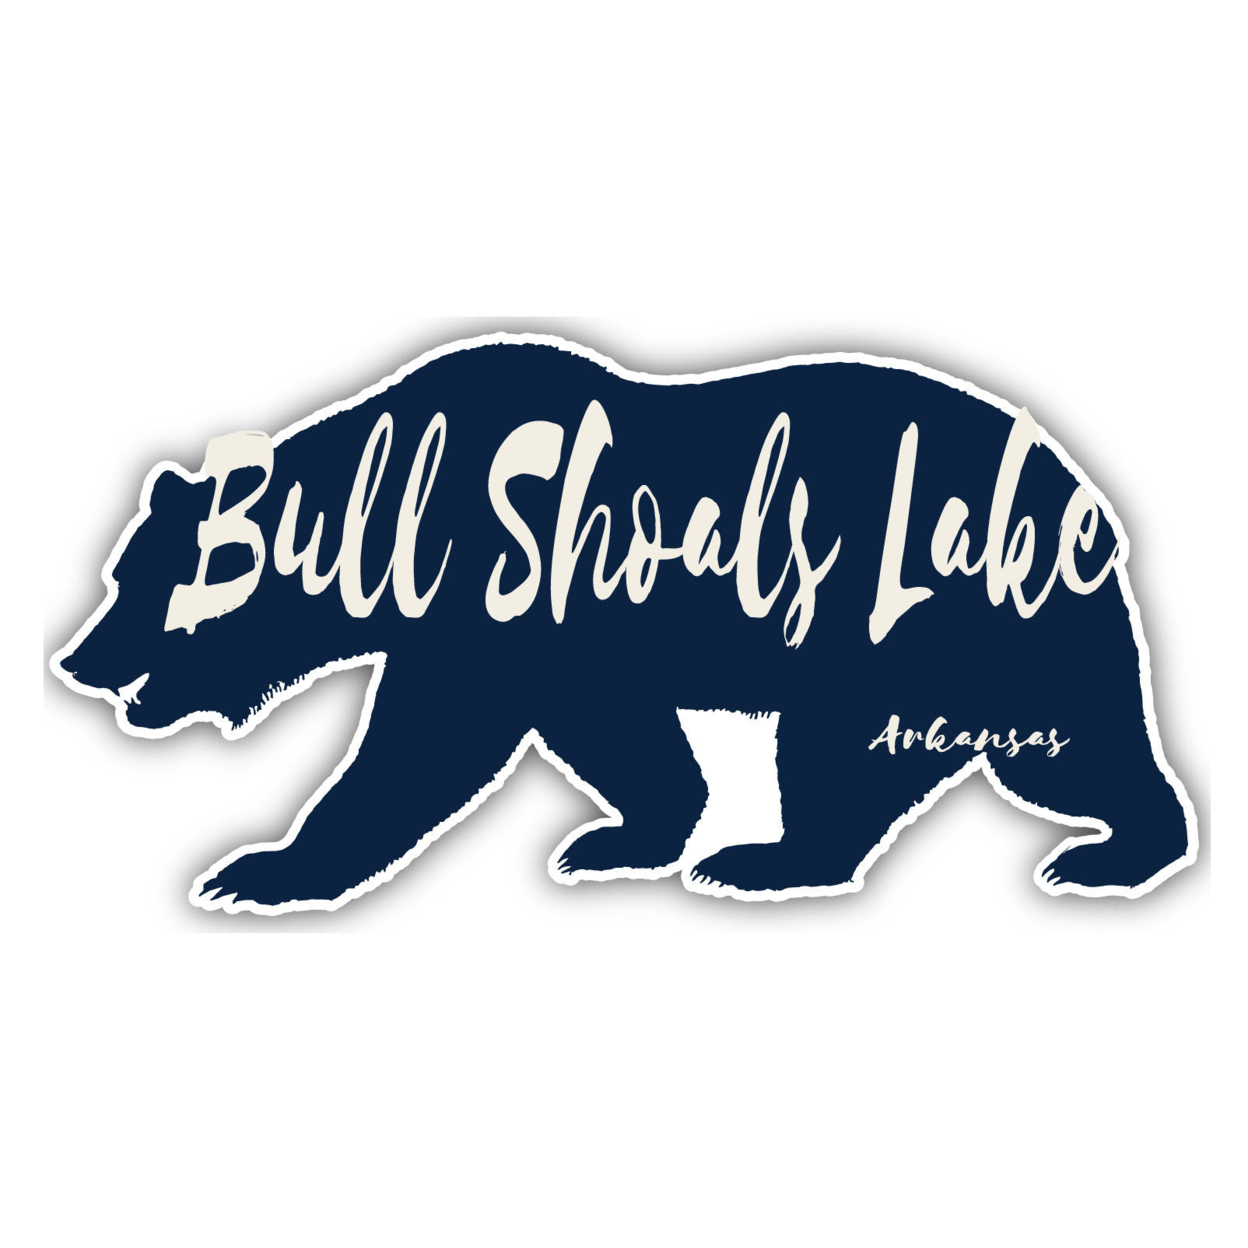 Bull Shoals Lake Arkansas Souvenir Decorative Stickers (Choose Theme And Size) - Single Unit, 4-Inch, Tent